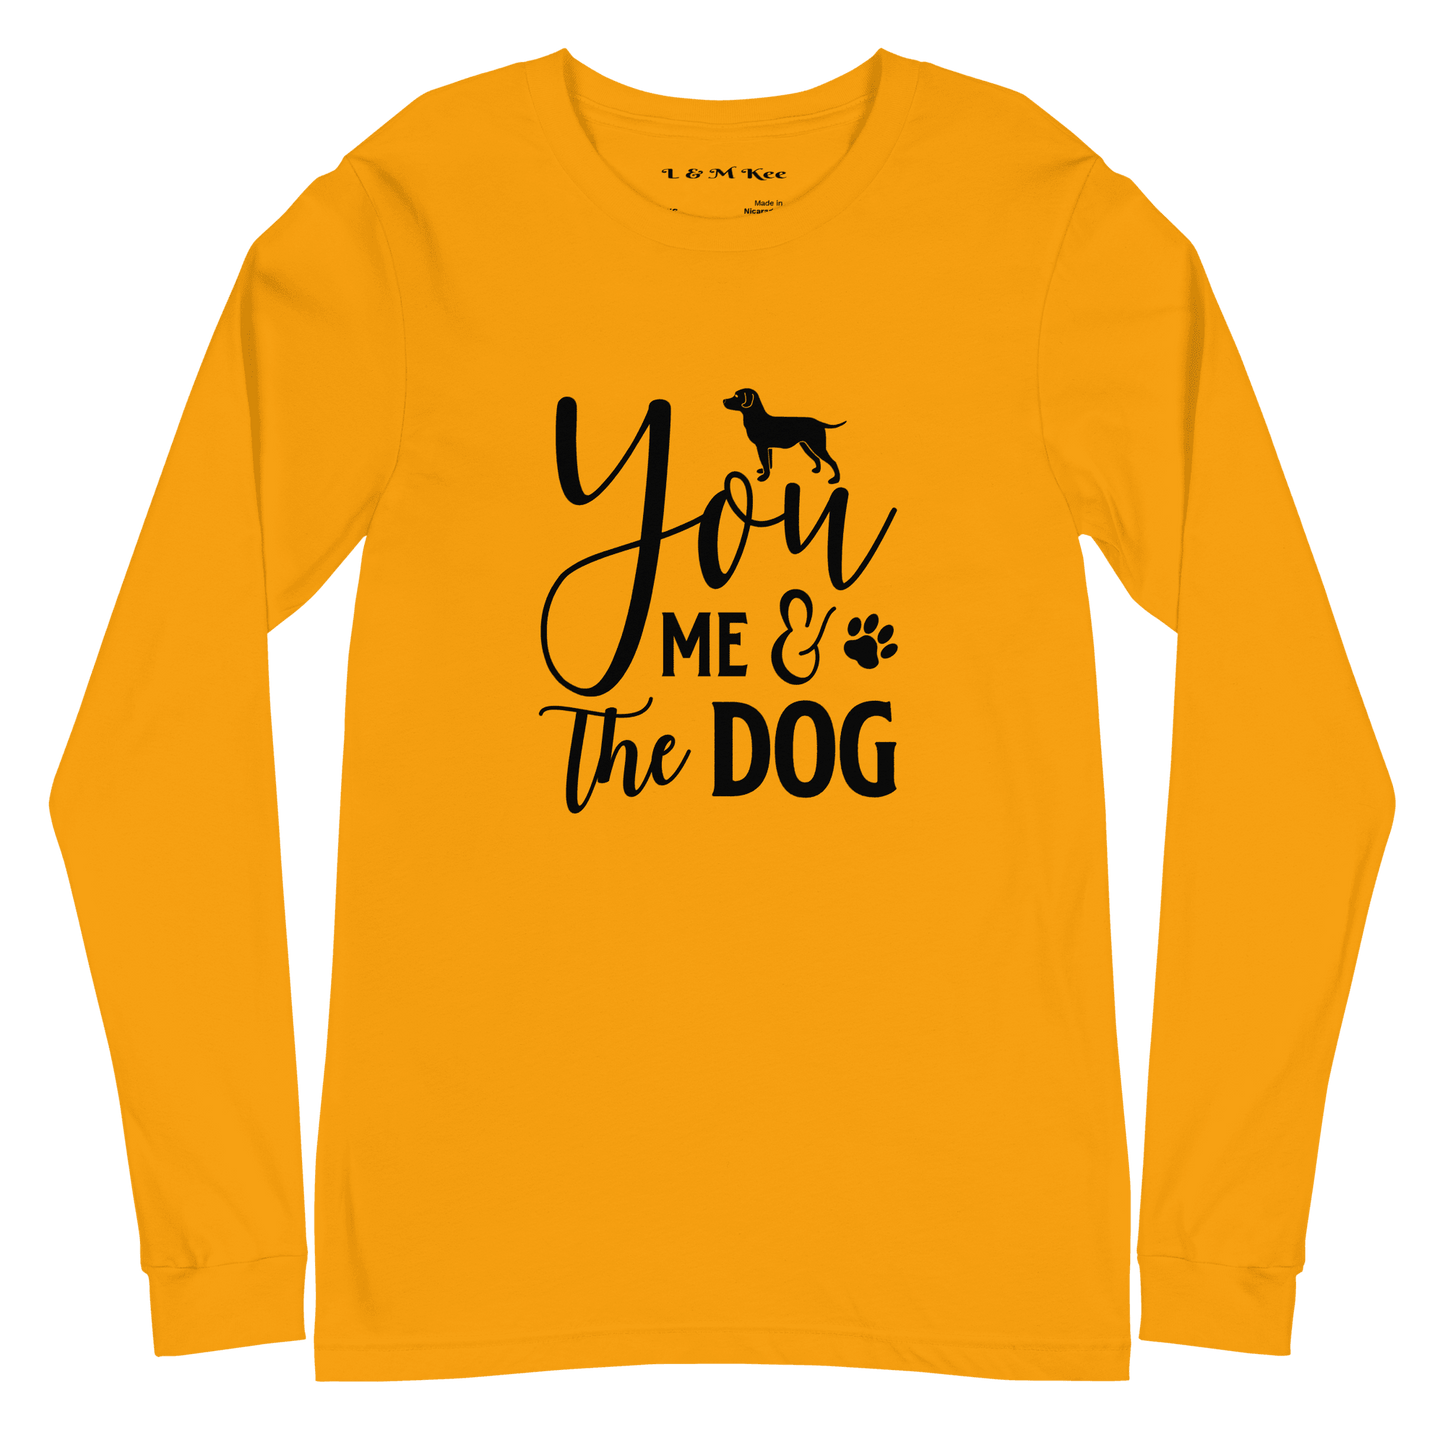 You Me & the Dog Unisex Long Sleeve Tee - L & M Kee, LLC